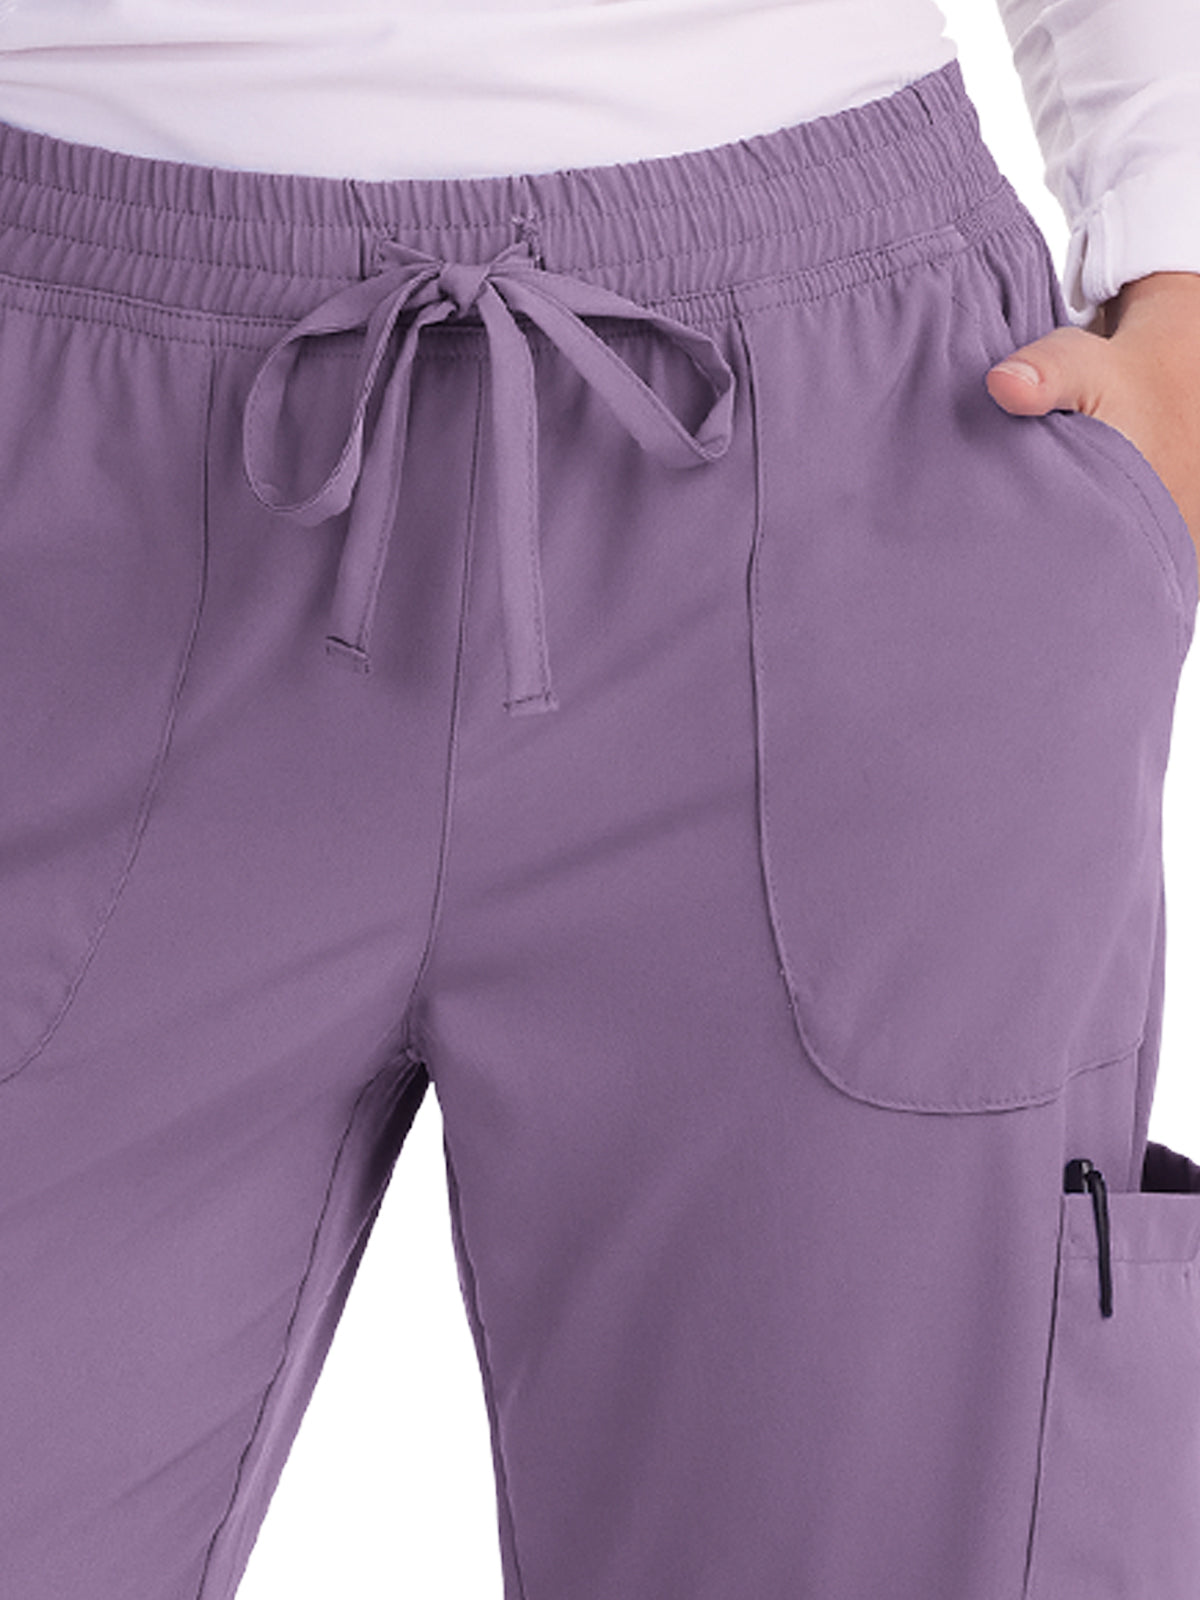 Women's Drawstring Elastic Adjustable Cinch Dunia Scrub Pant